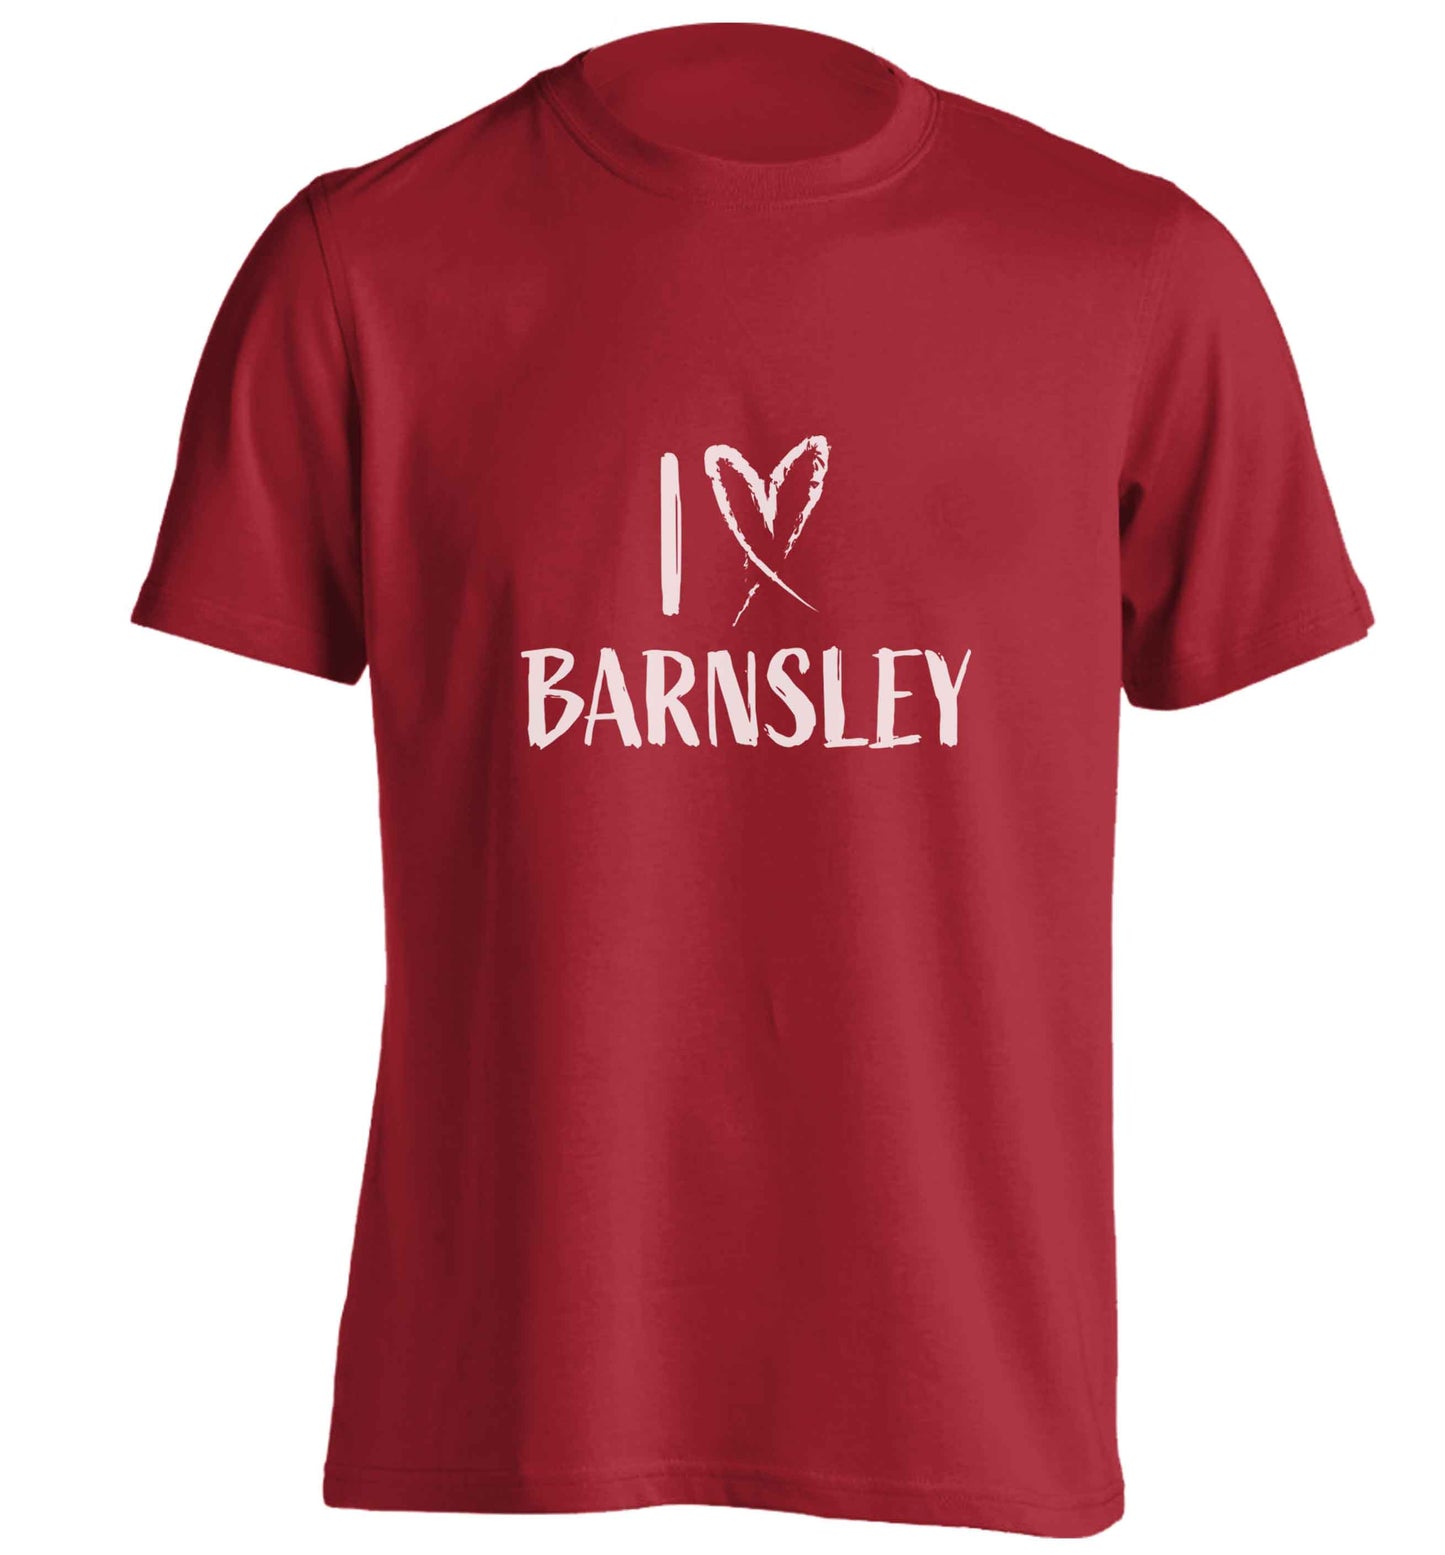 I love Barnsley adults unisex red Tshirt 2XL